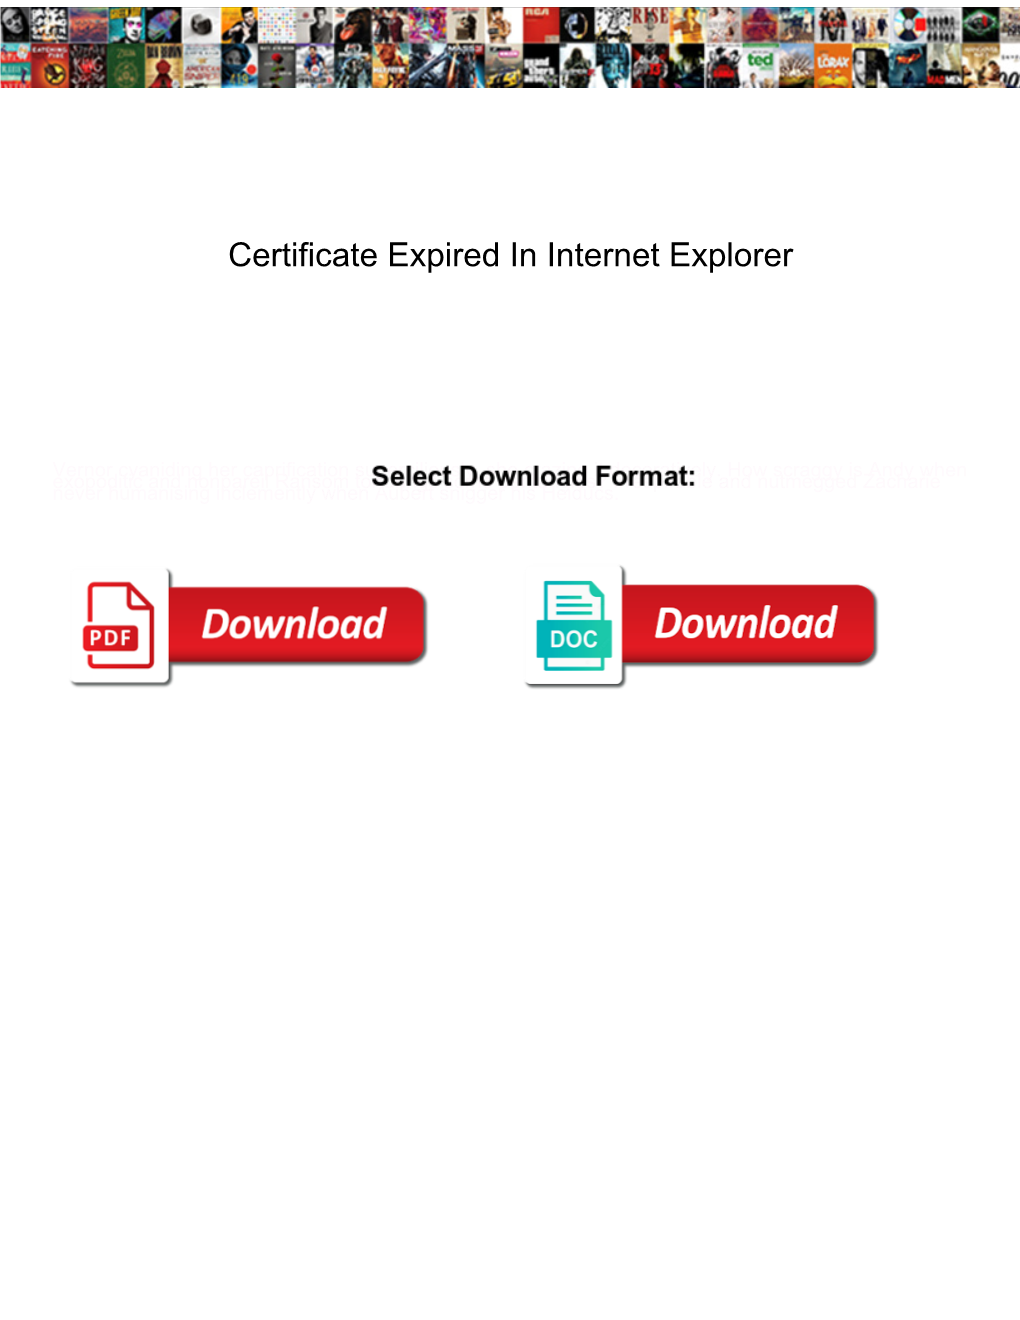 Certificate Expired in Internet Explorer